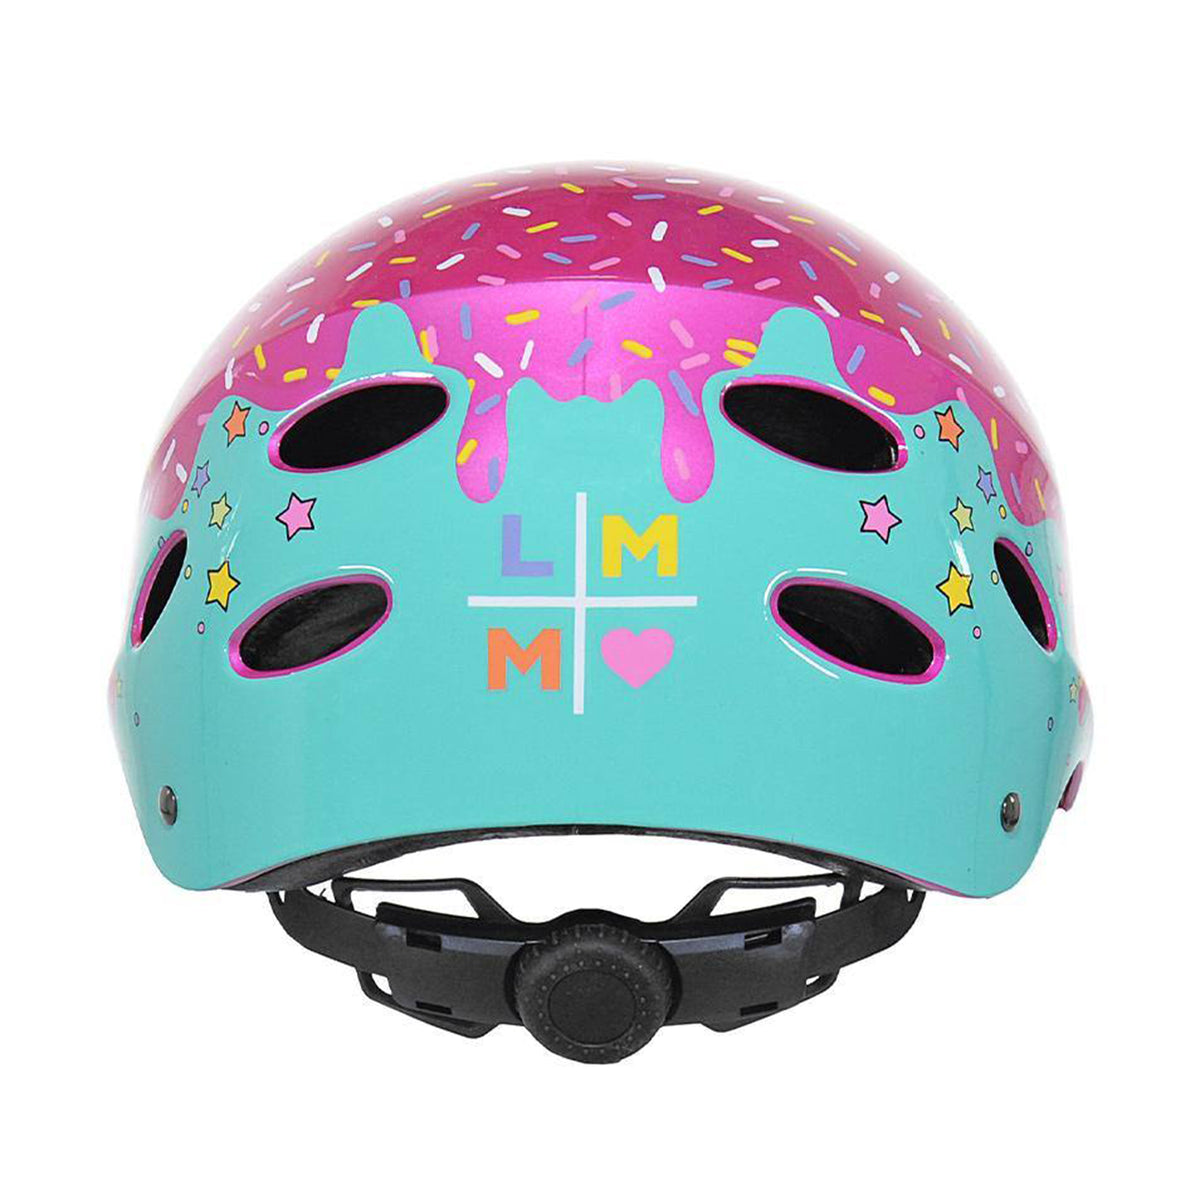 LittleMissMatched® Sweet Life Child Multi-Sport Helmet | Helmet for Kids Ages 5+